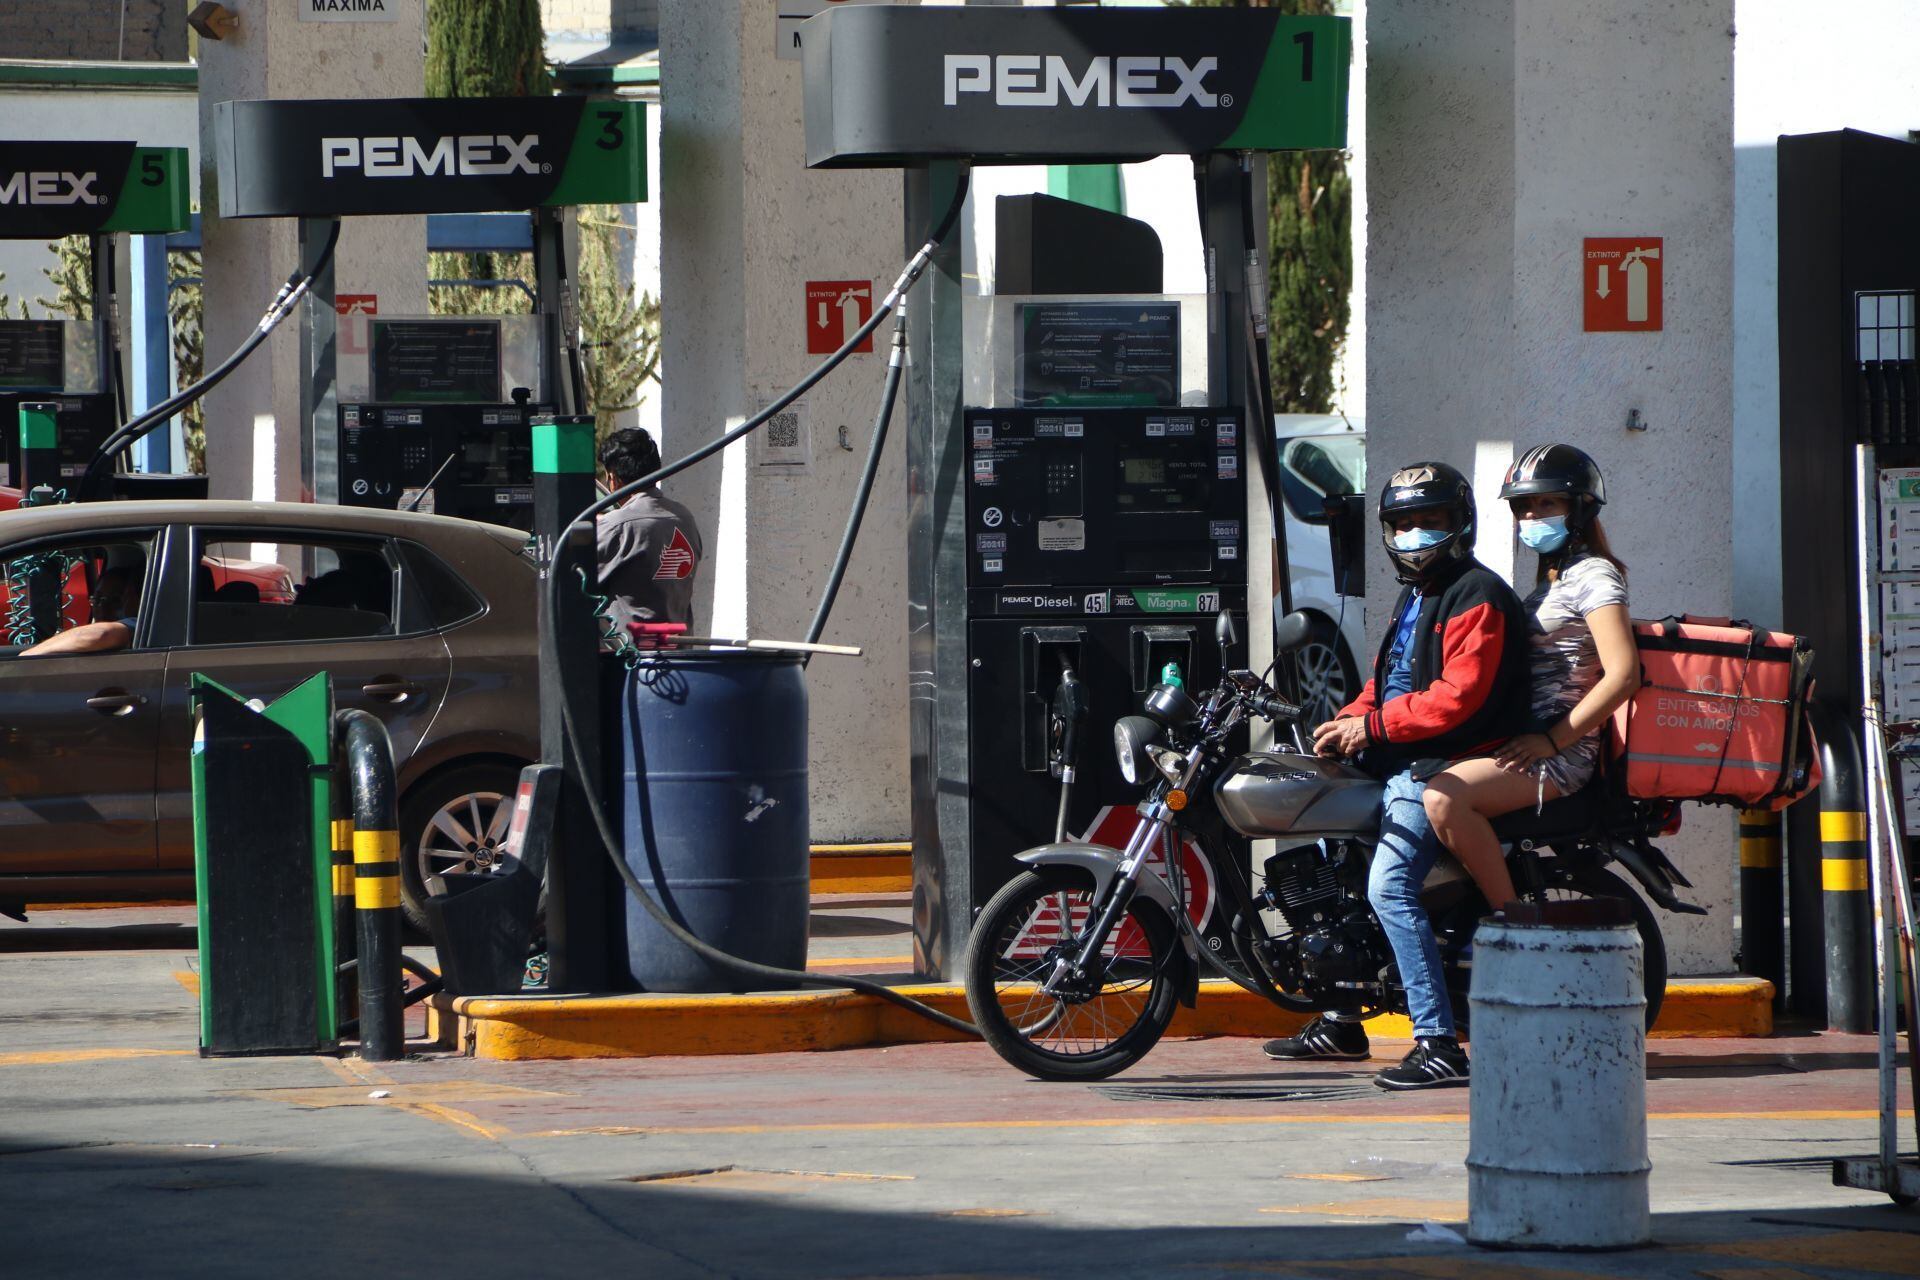 Gasolina cara: estas son algunas marcas con precios altos en México